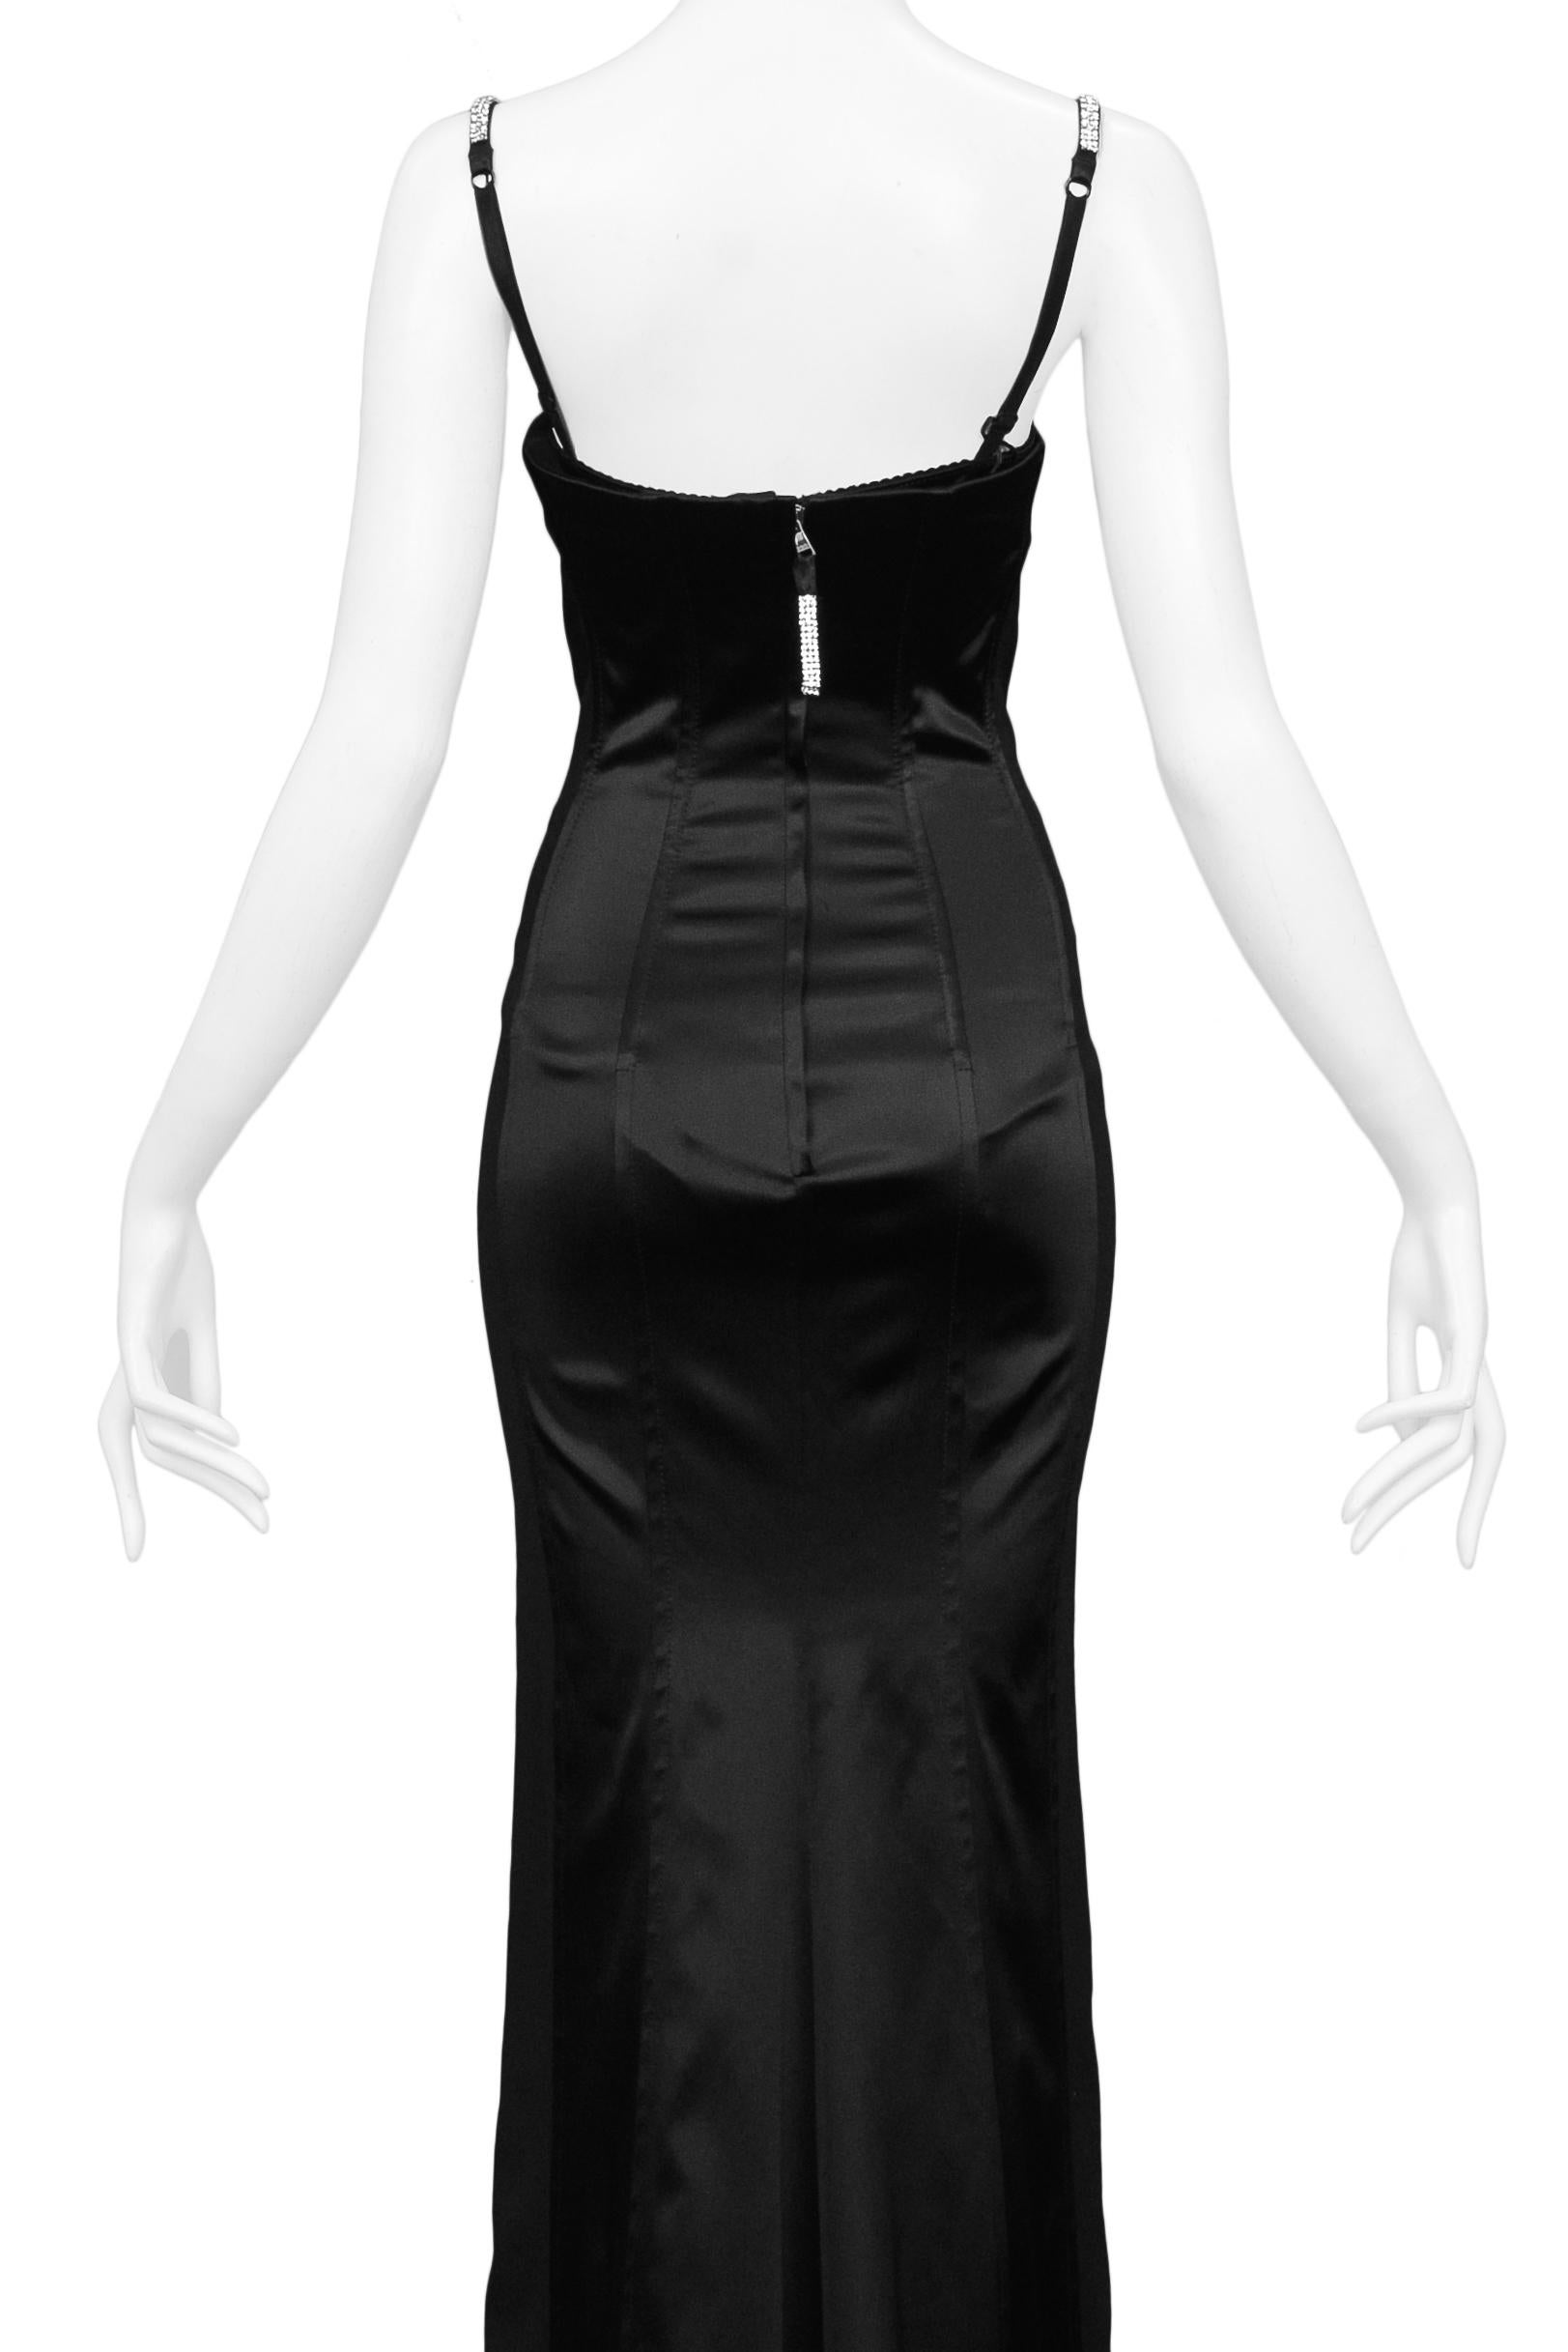 vintage black evening gown